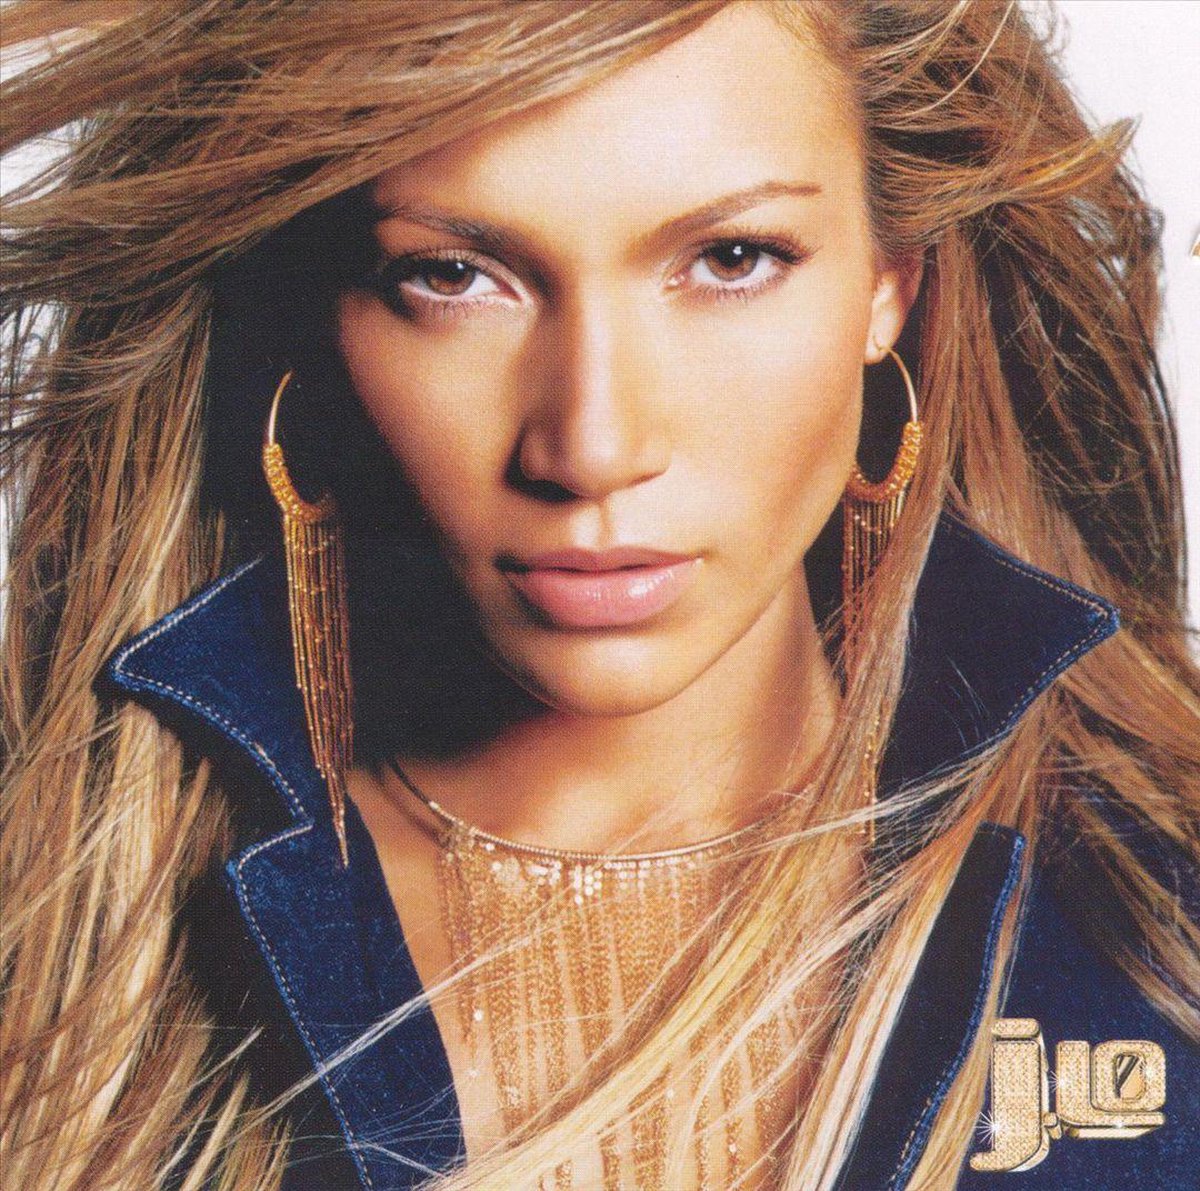 J.lo - Jennifer Lopez